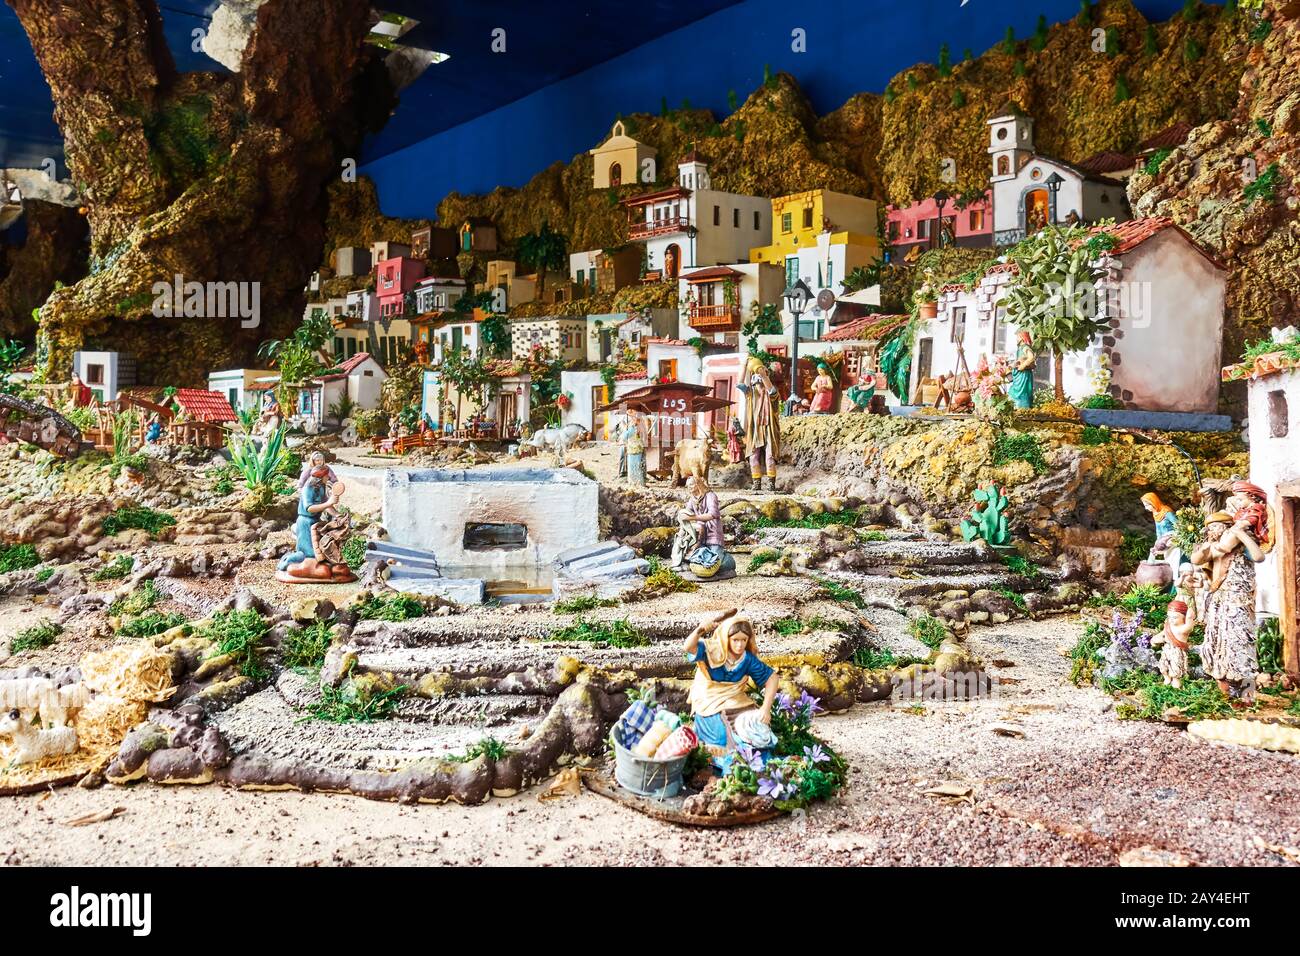 Candelaria, Tenerife, Spagna - 12 dicembre 2019: Belen di Natale - Creche, Presepe, statuetta di persone e case in miniatura Foto Stock